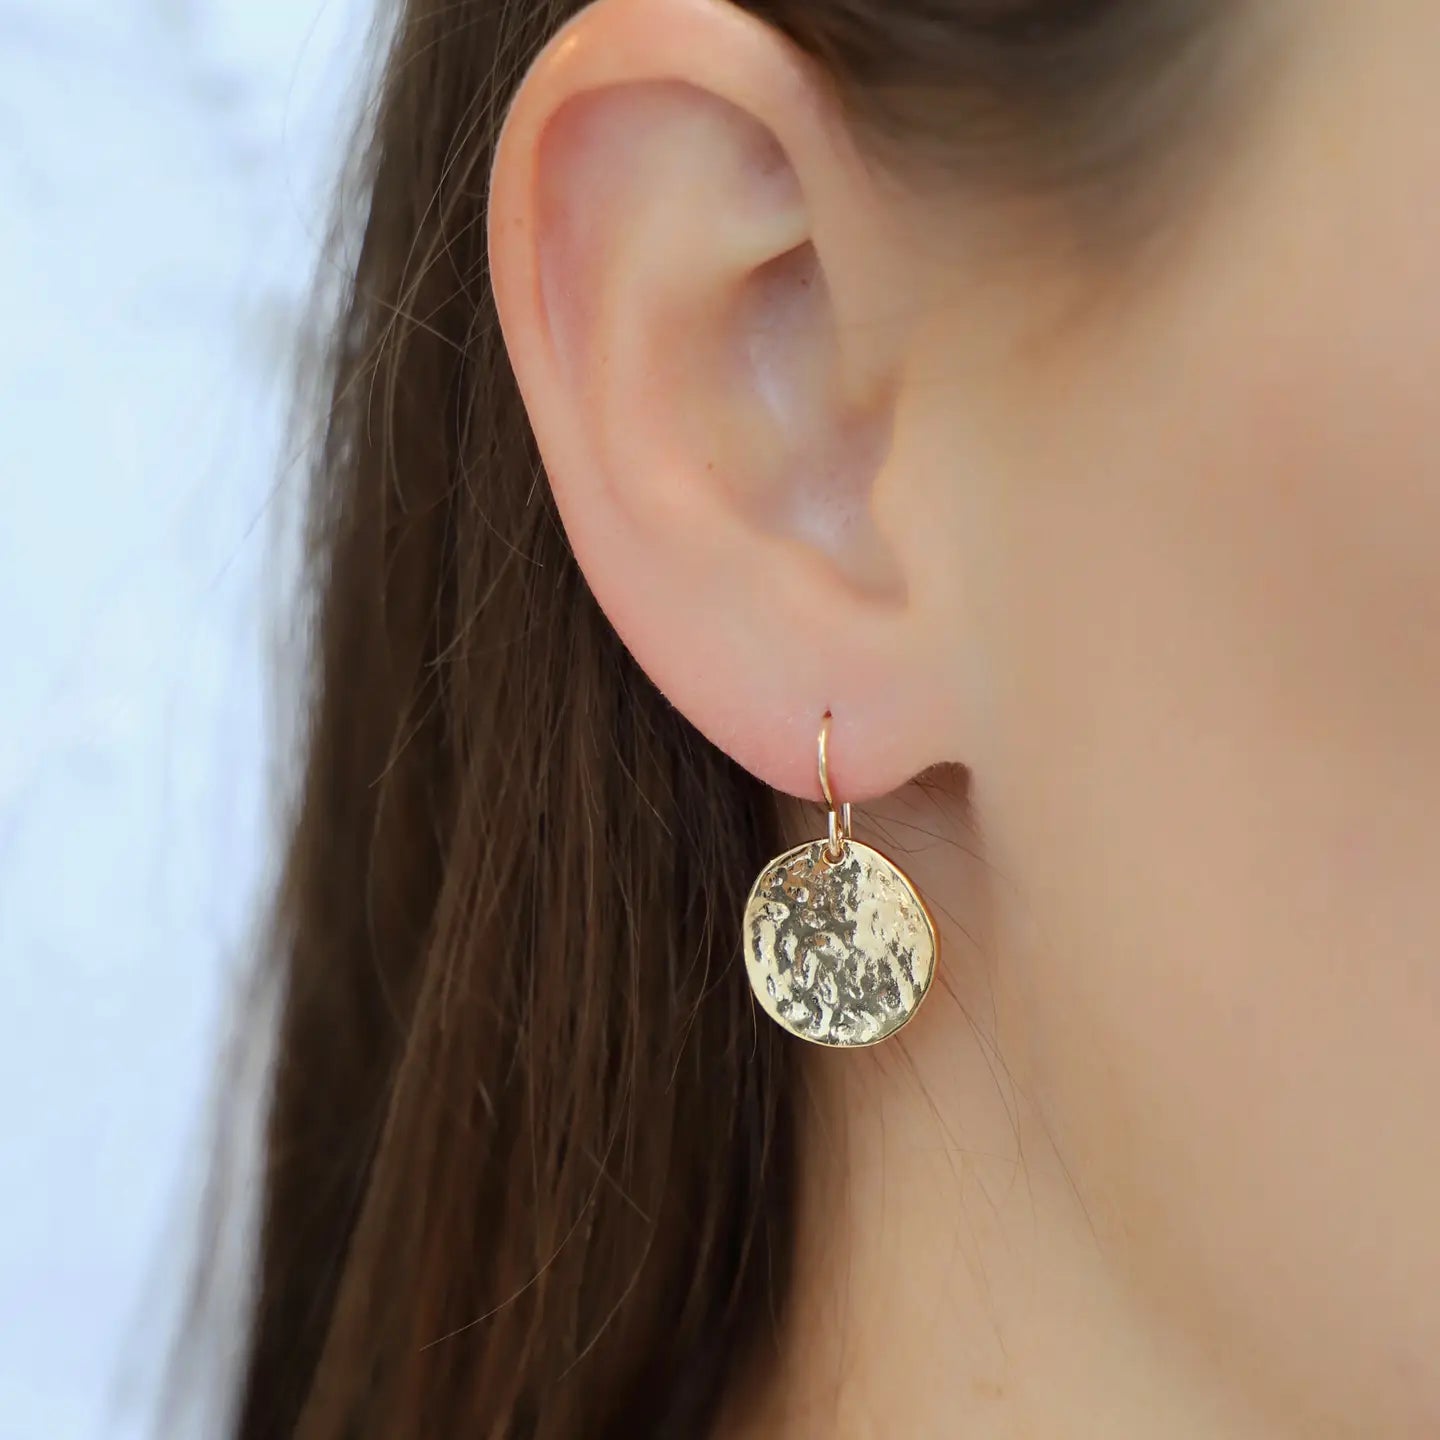 Woman wearing the Gold Hammered Medallion Earrings by Katie Waltman Jewelry